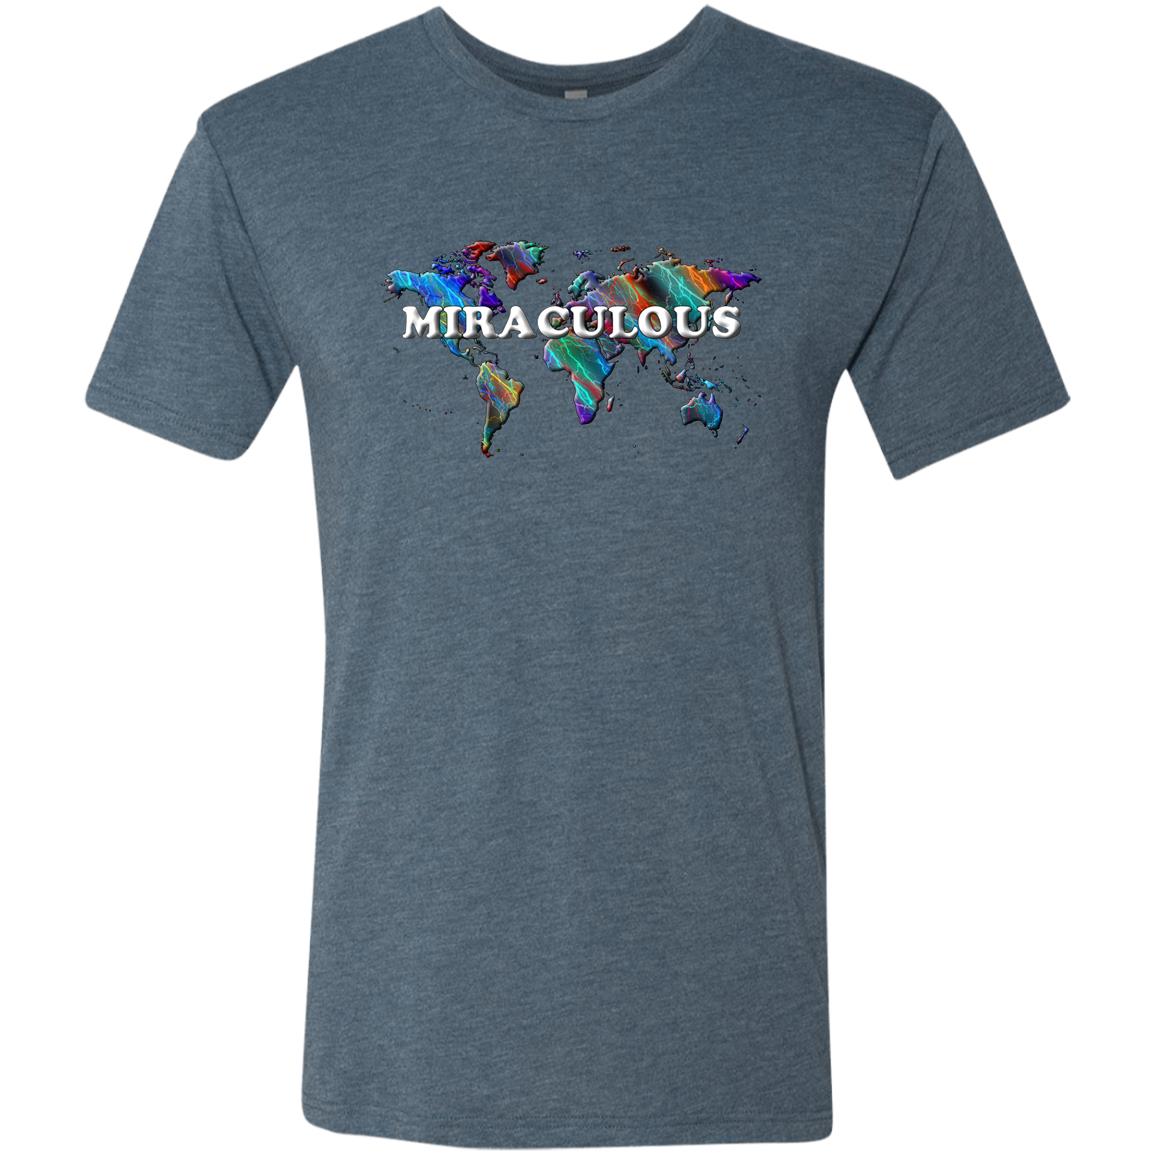 Miraculous Statement T-Shirt